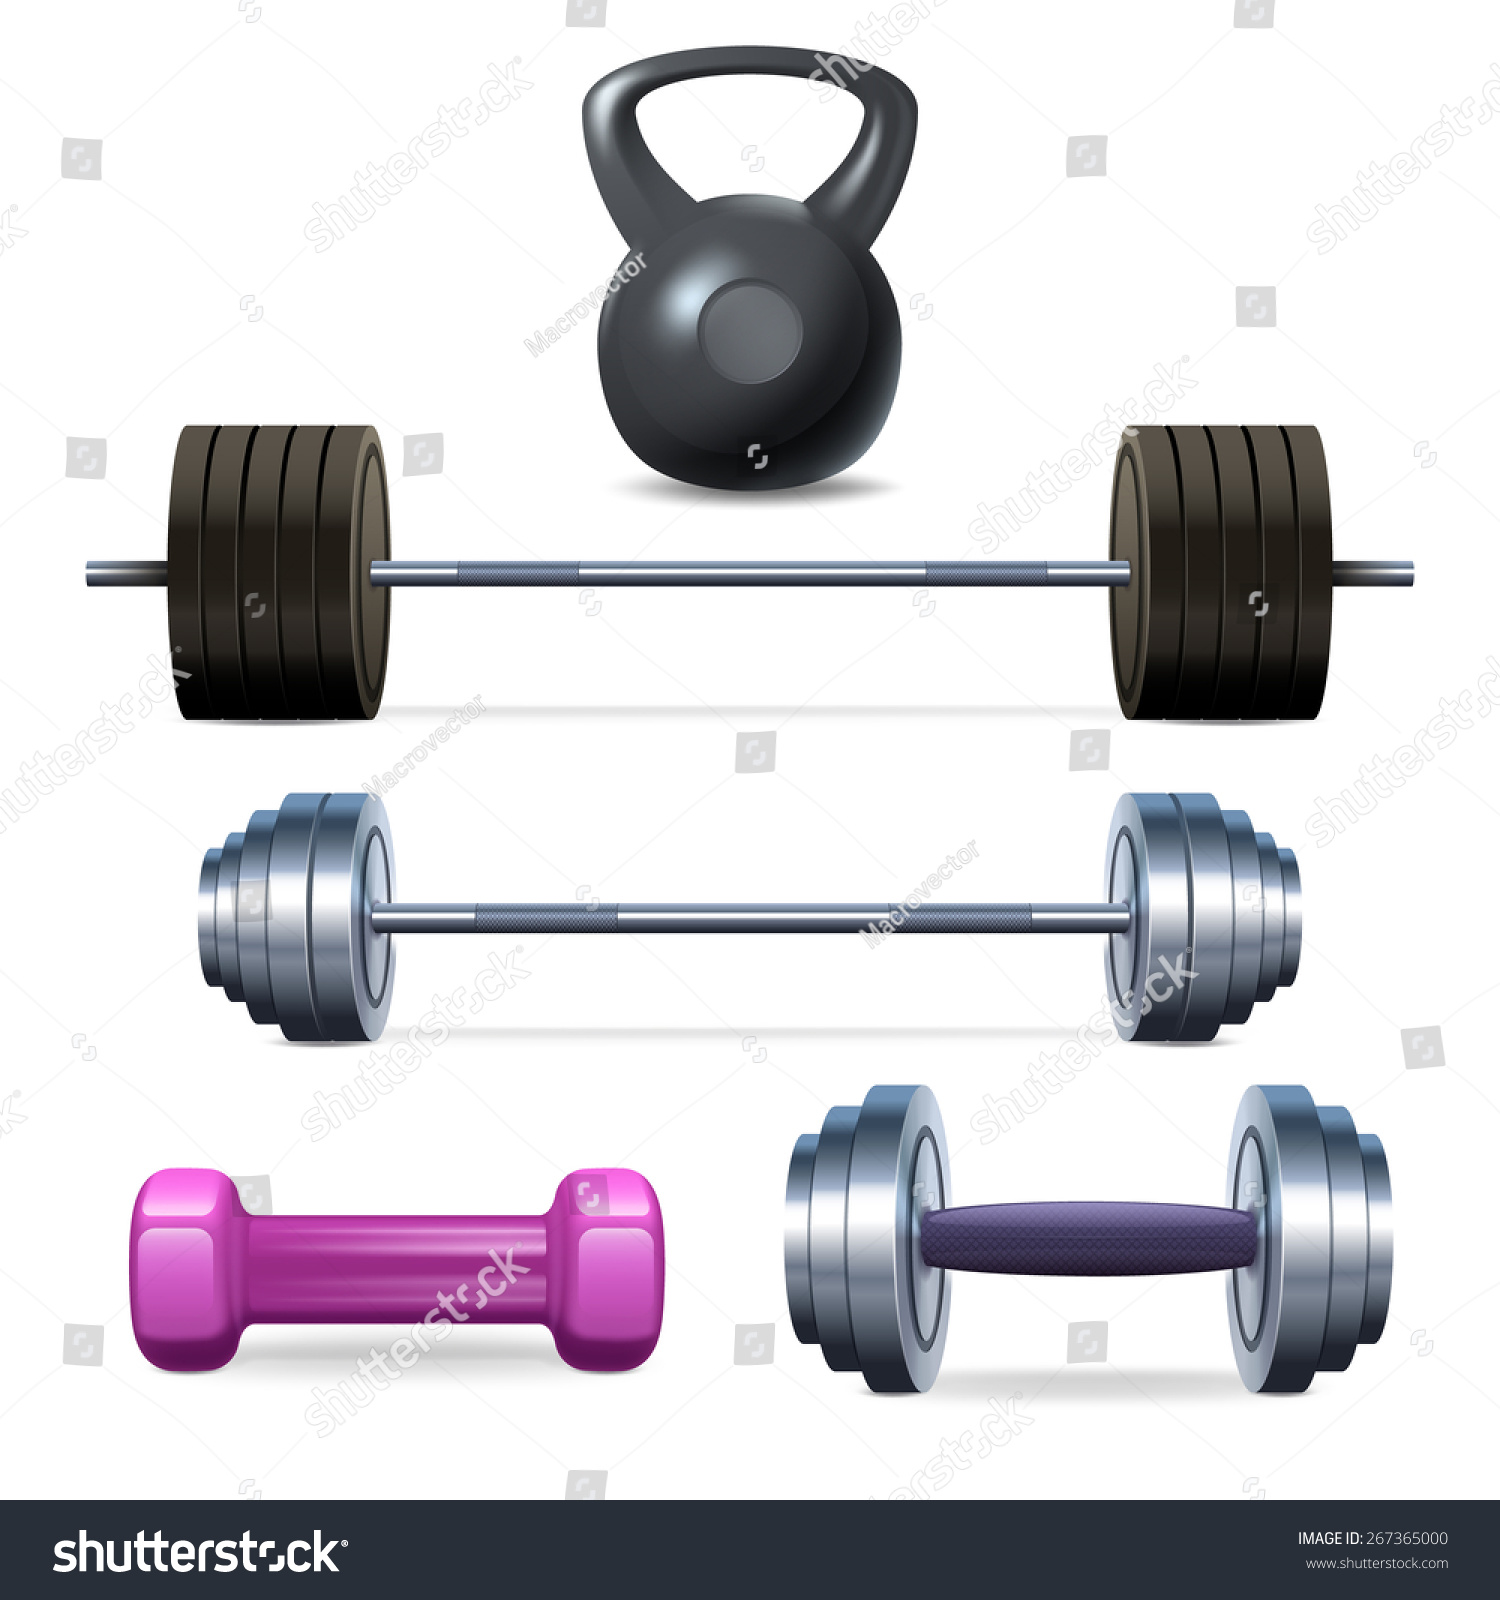 bodybuilding equipment